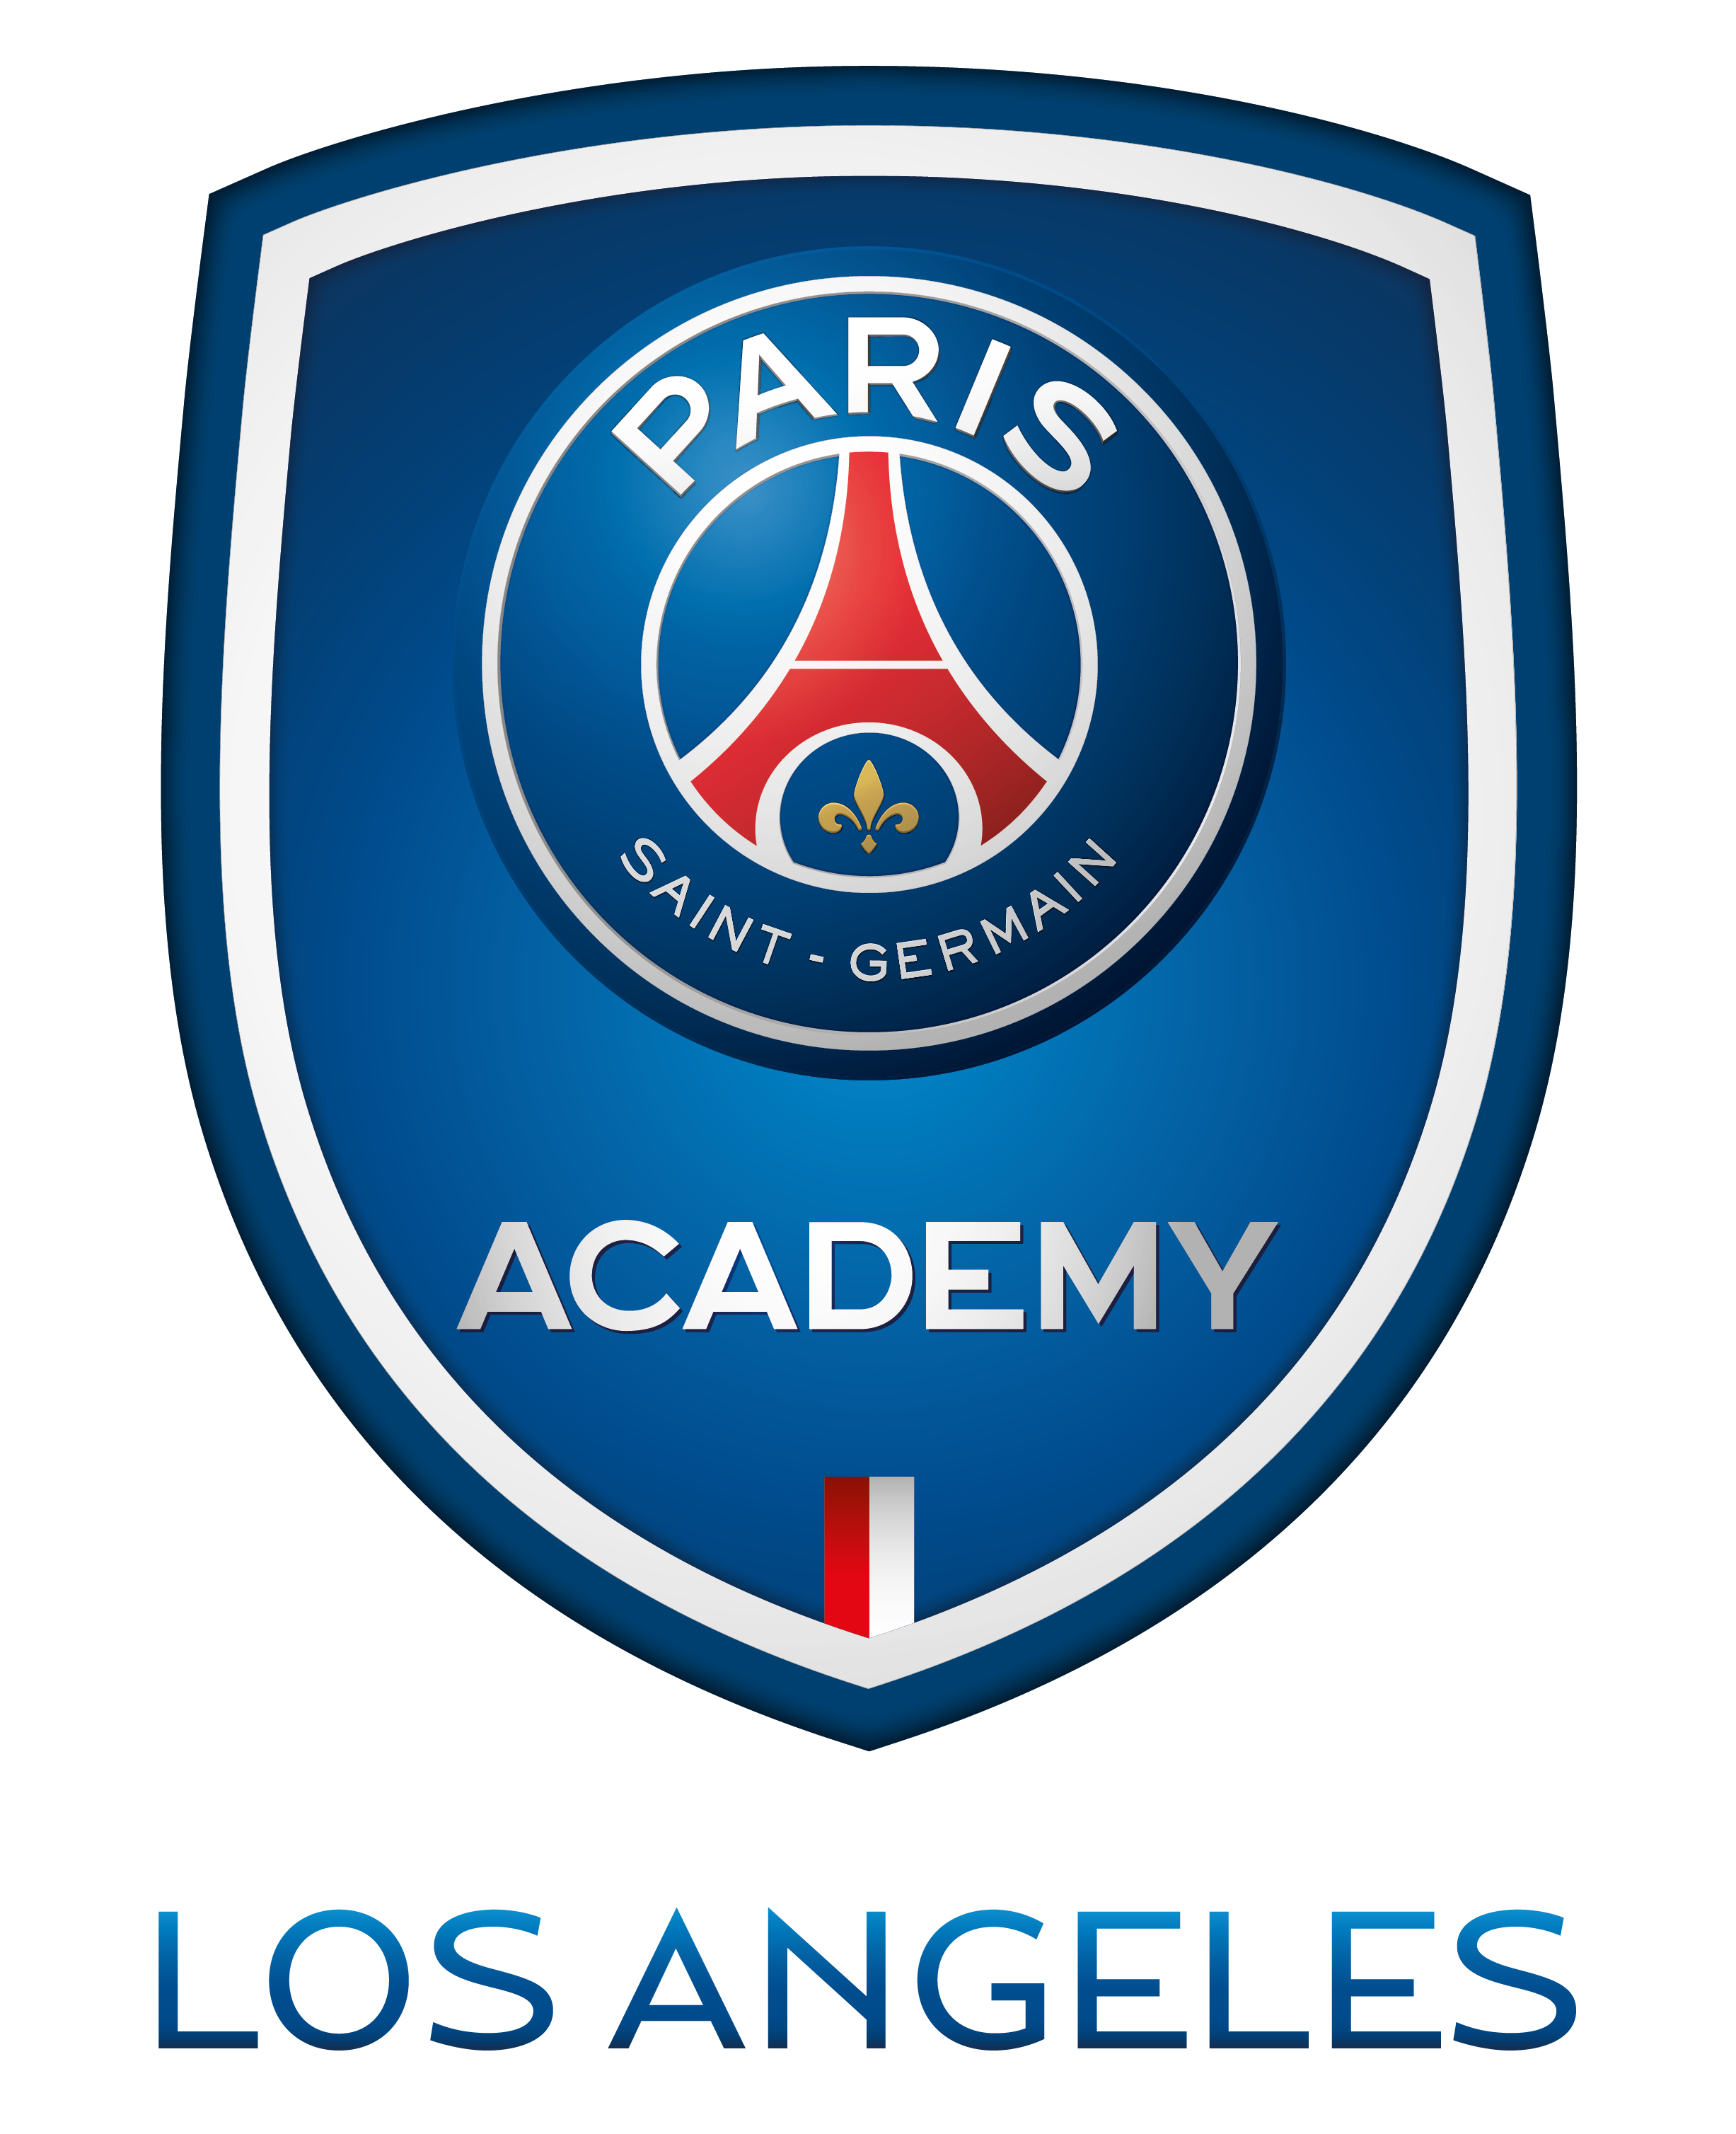 Paris Saint-Germain Academy Los Angeles, #1 Soccer Club